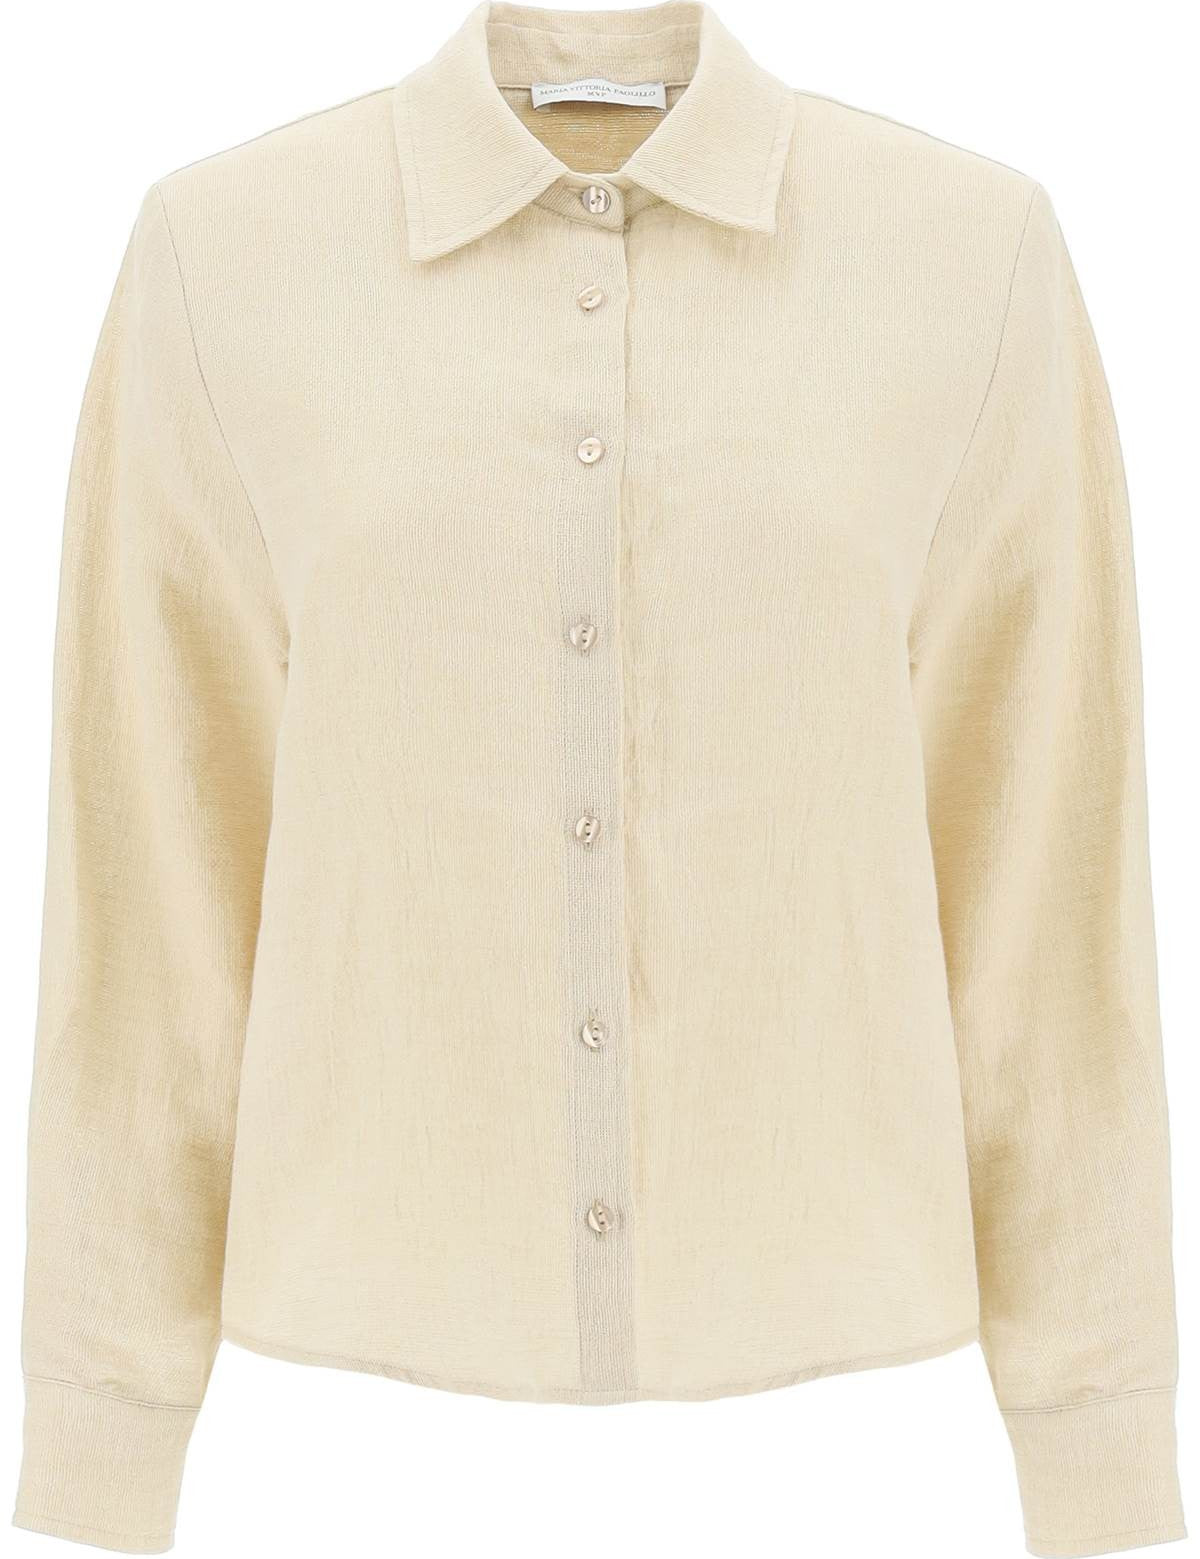 mvp-wardrobe-malibu-cotton-linen-shirt.jpg